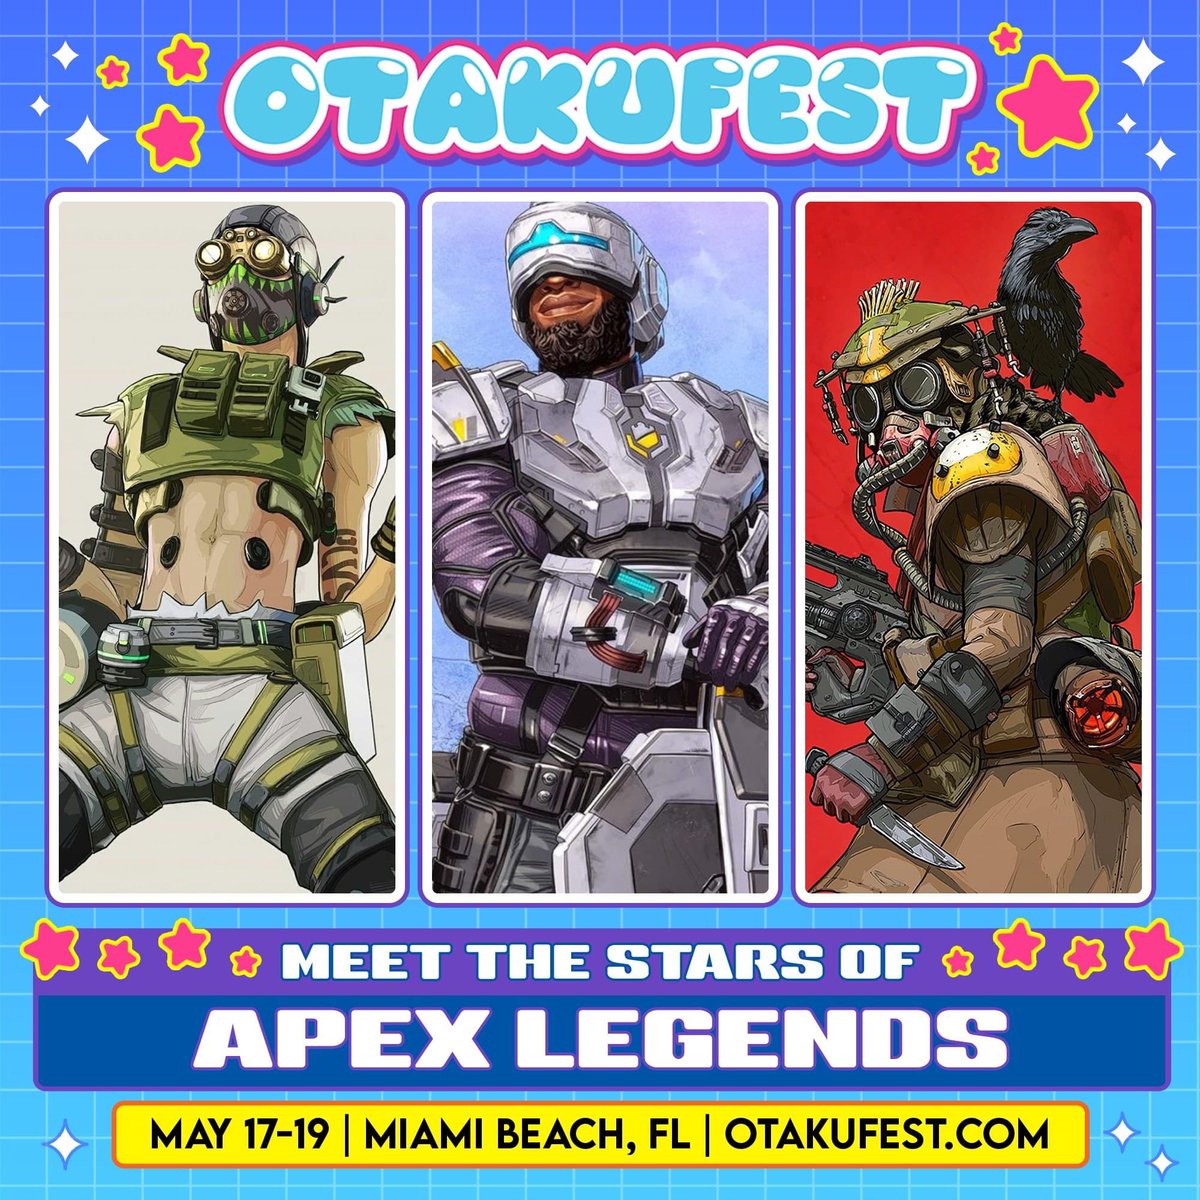 Meet the stars of Apex Legends at #OtakuFest in Miami Beach, FL! ￼Tickets: otakufest.com/tickets ￼Guests: otakufest.com/guests ￼Hotels: otakufest.com/hotel #anime #cosplay #gaming #manga #ApexLegends - @TheNicolasRoye @GabeKunda @SimplyAllegra